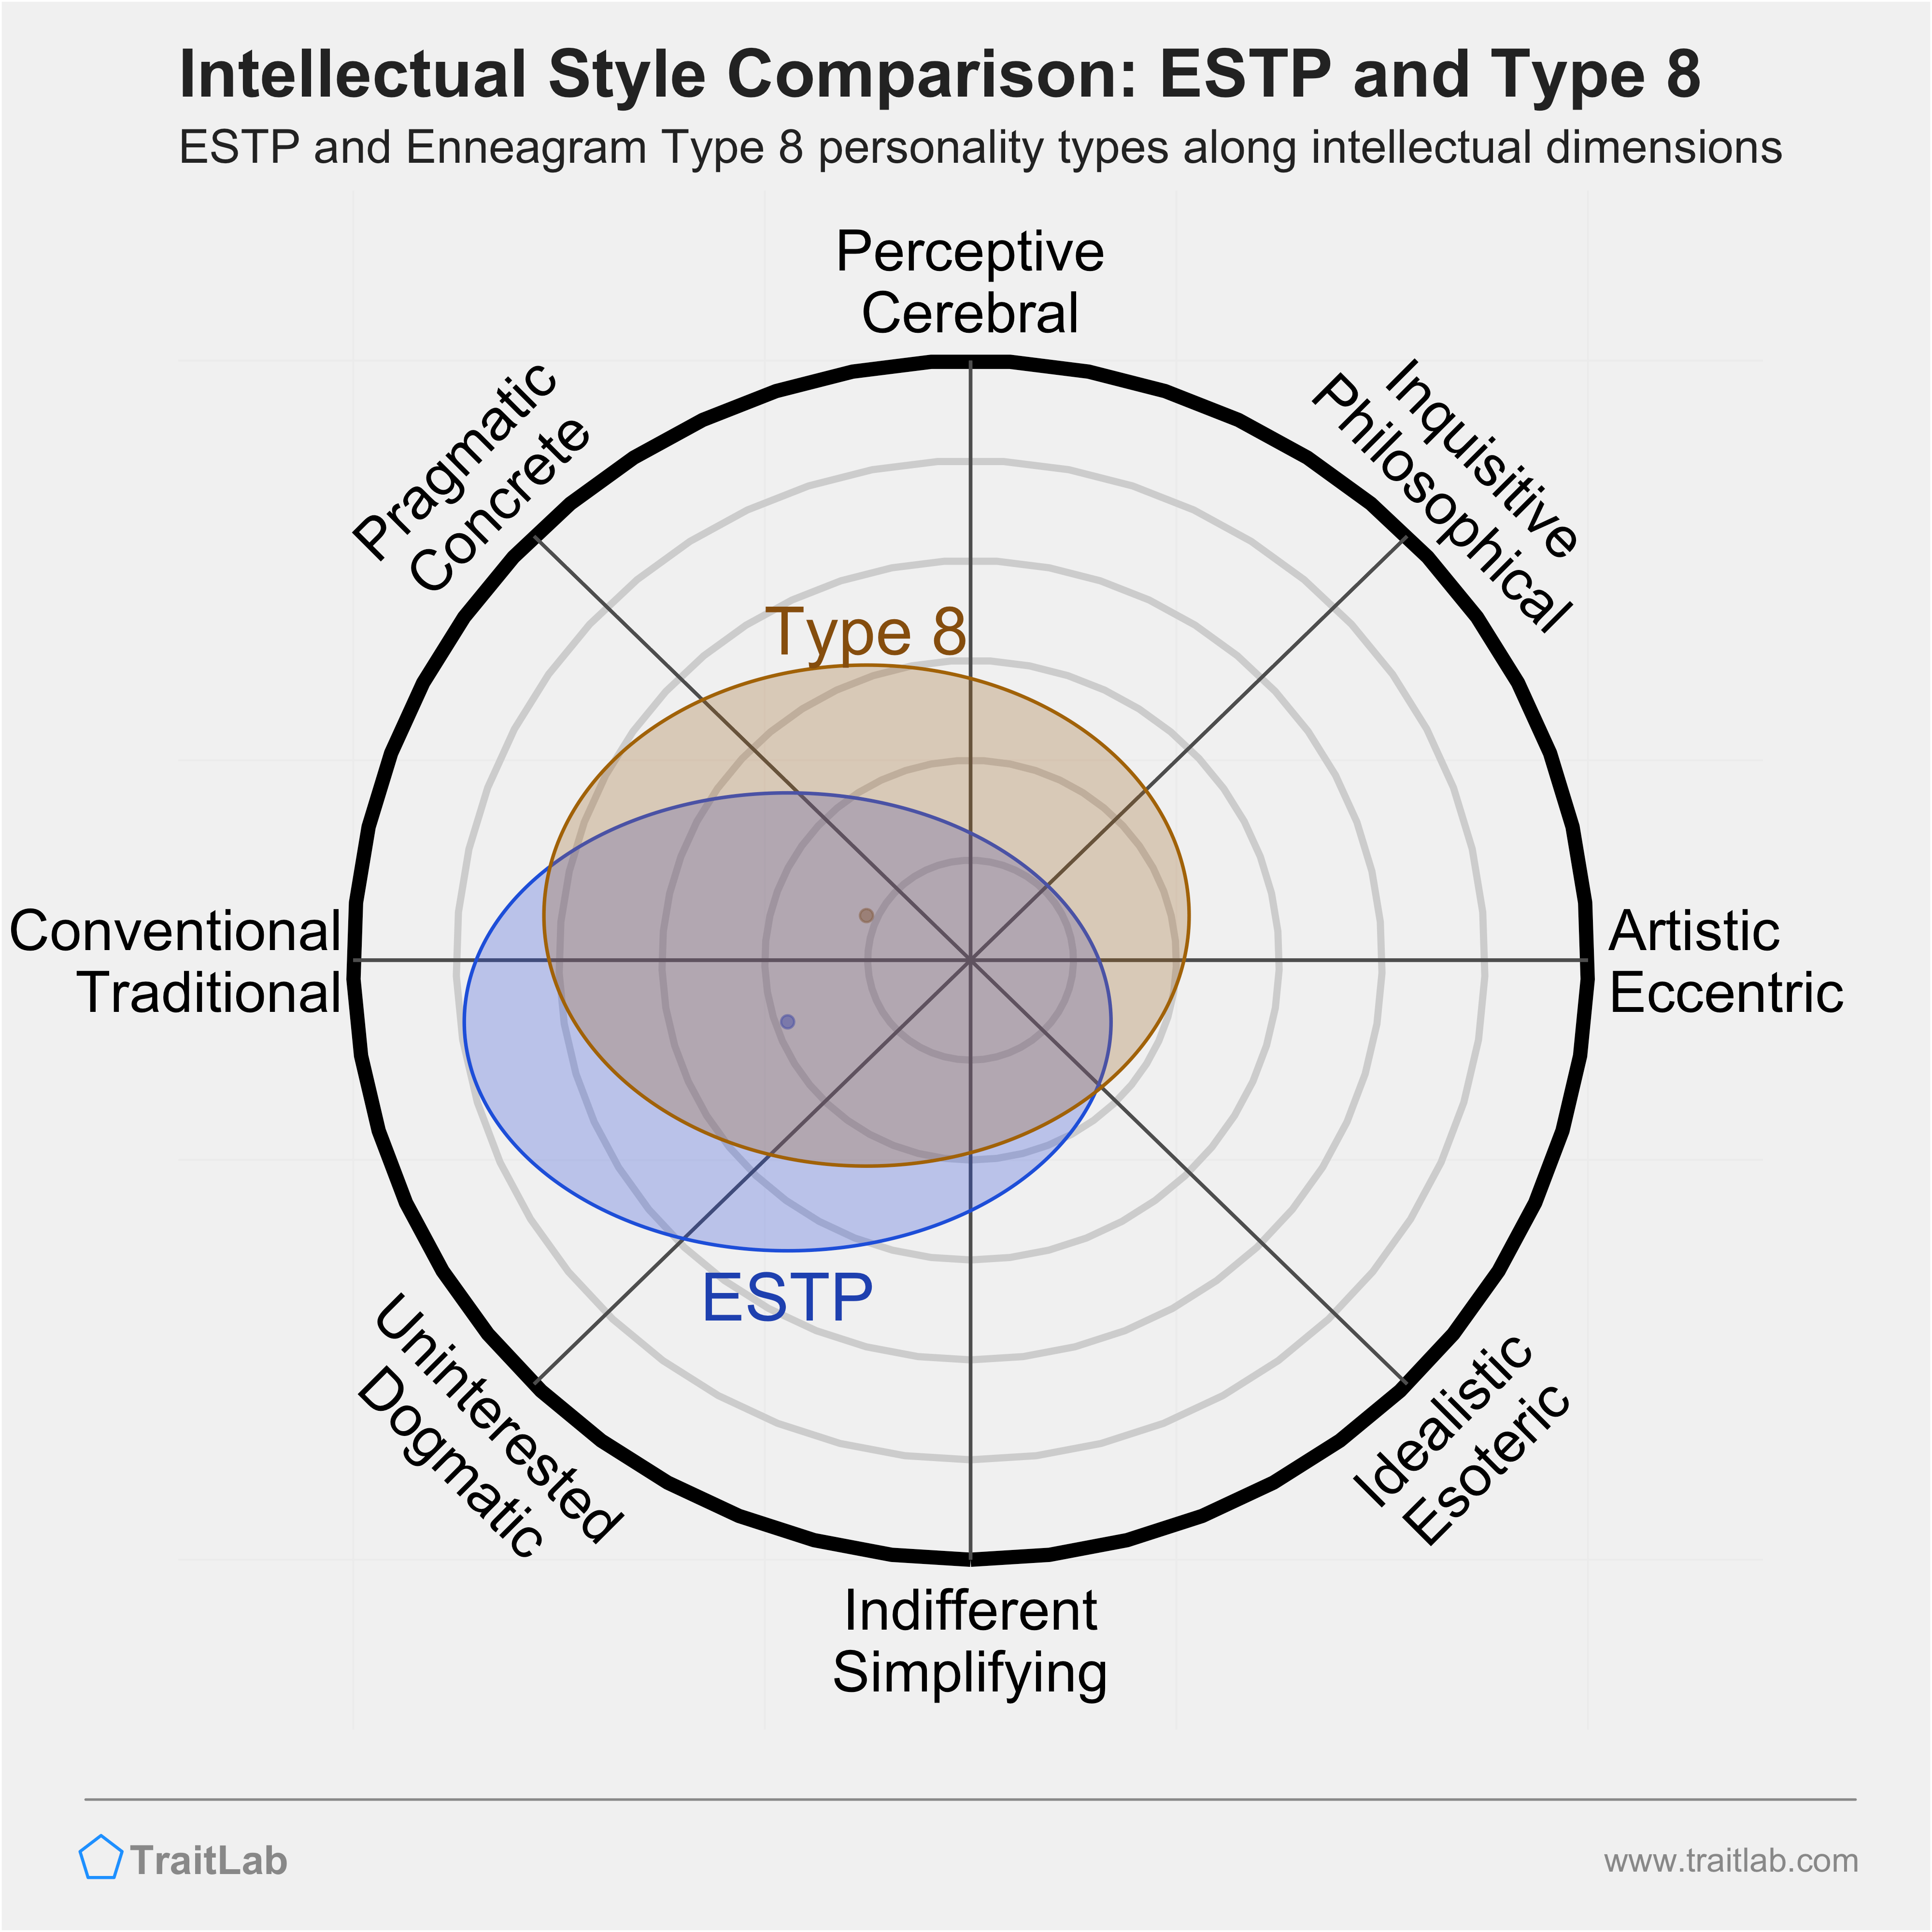 ESTP and Type 8 comparison across intellectual dimensions